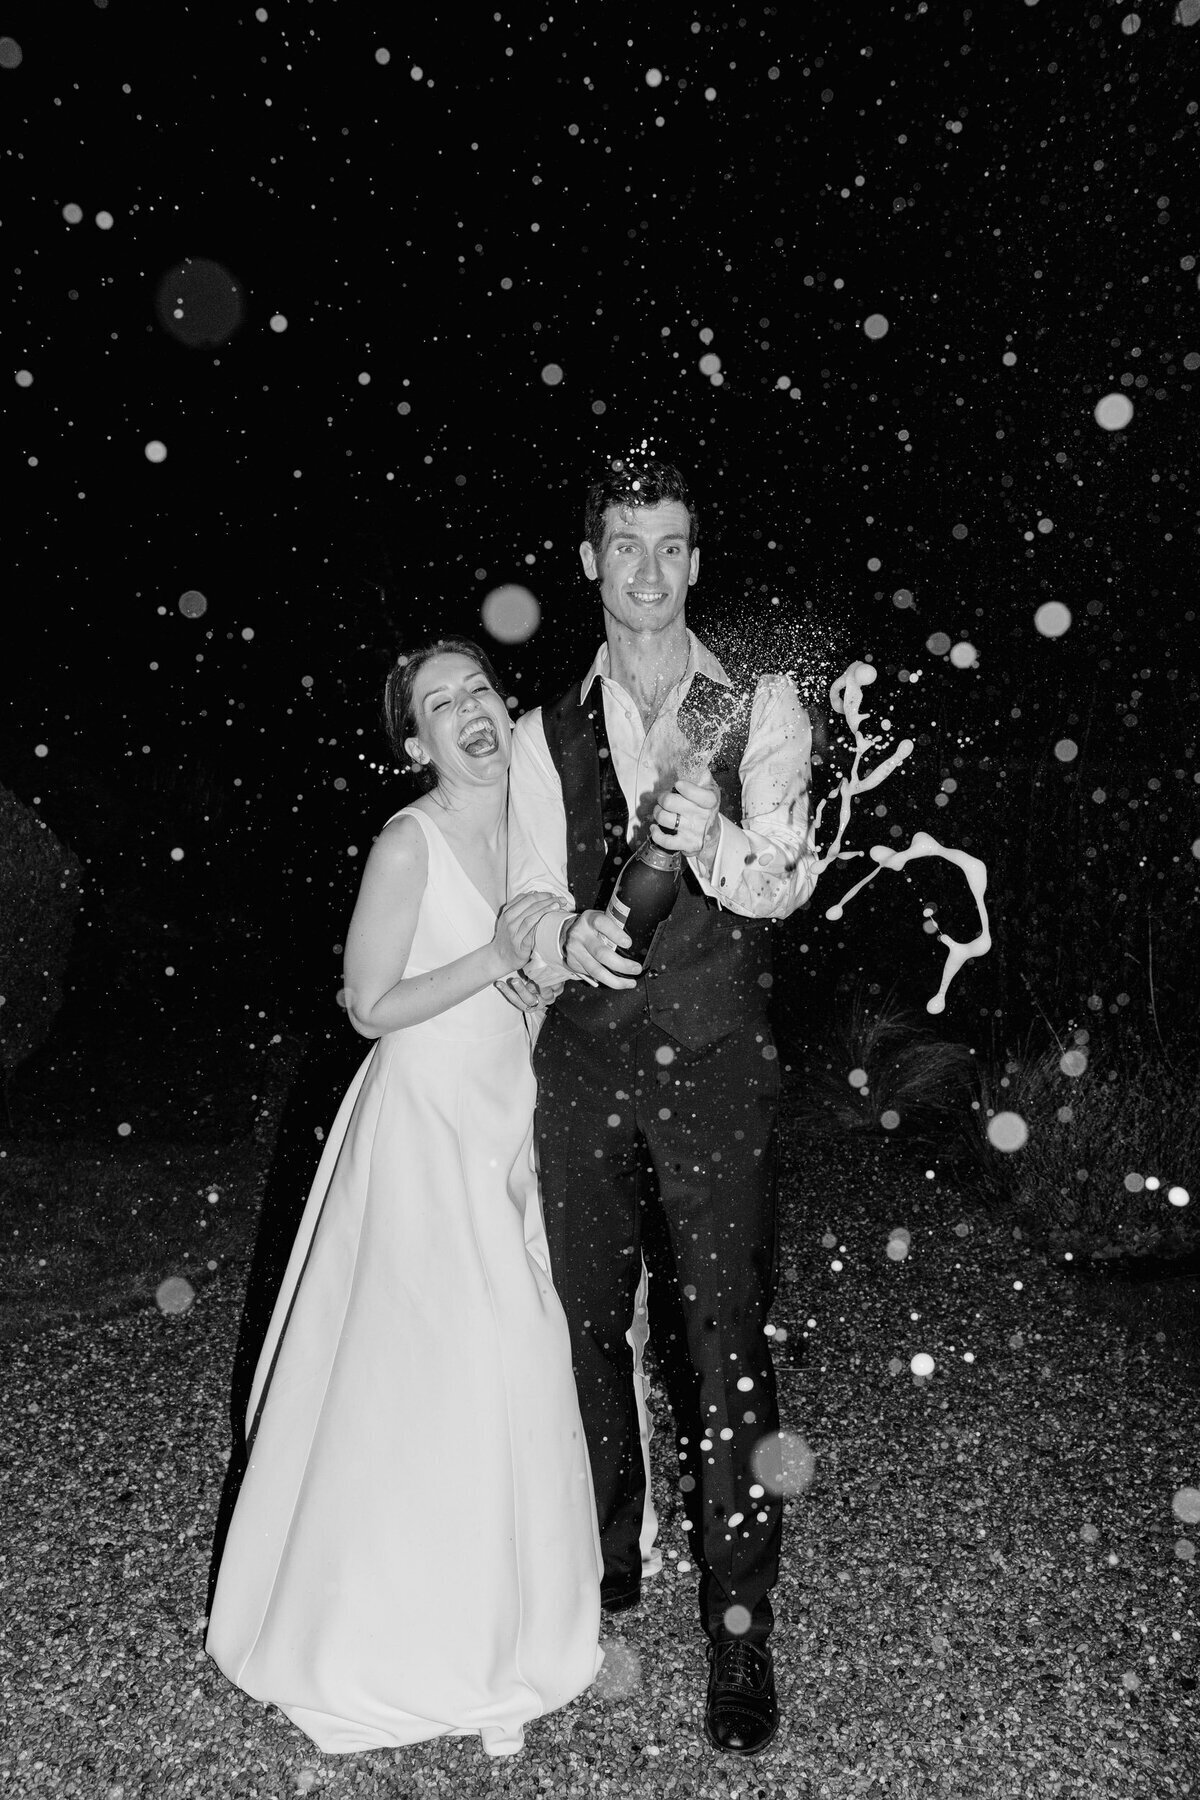 chmpagne-pop-black-white-night-wedding-photo